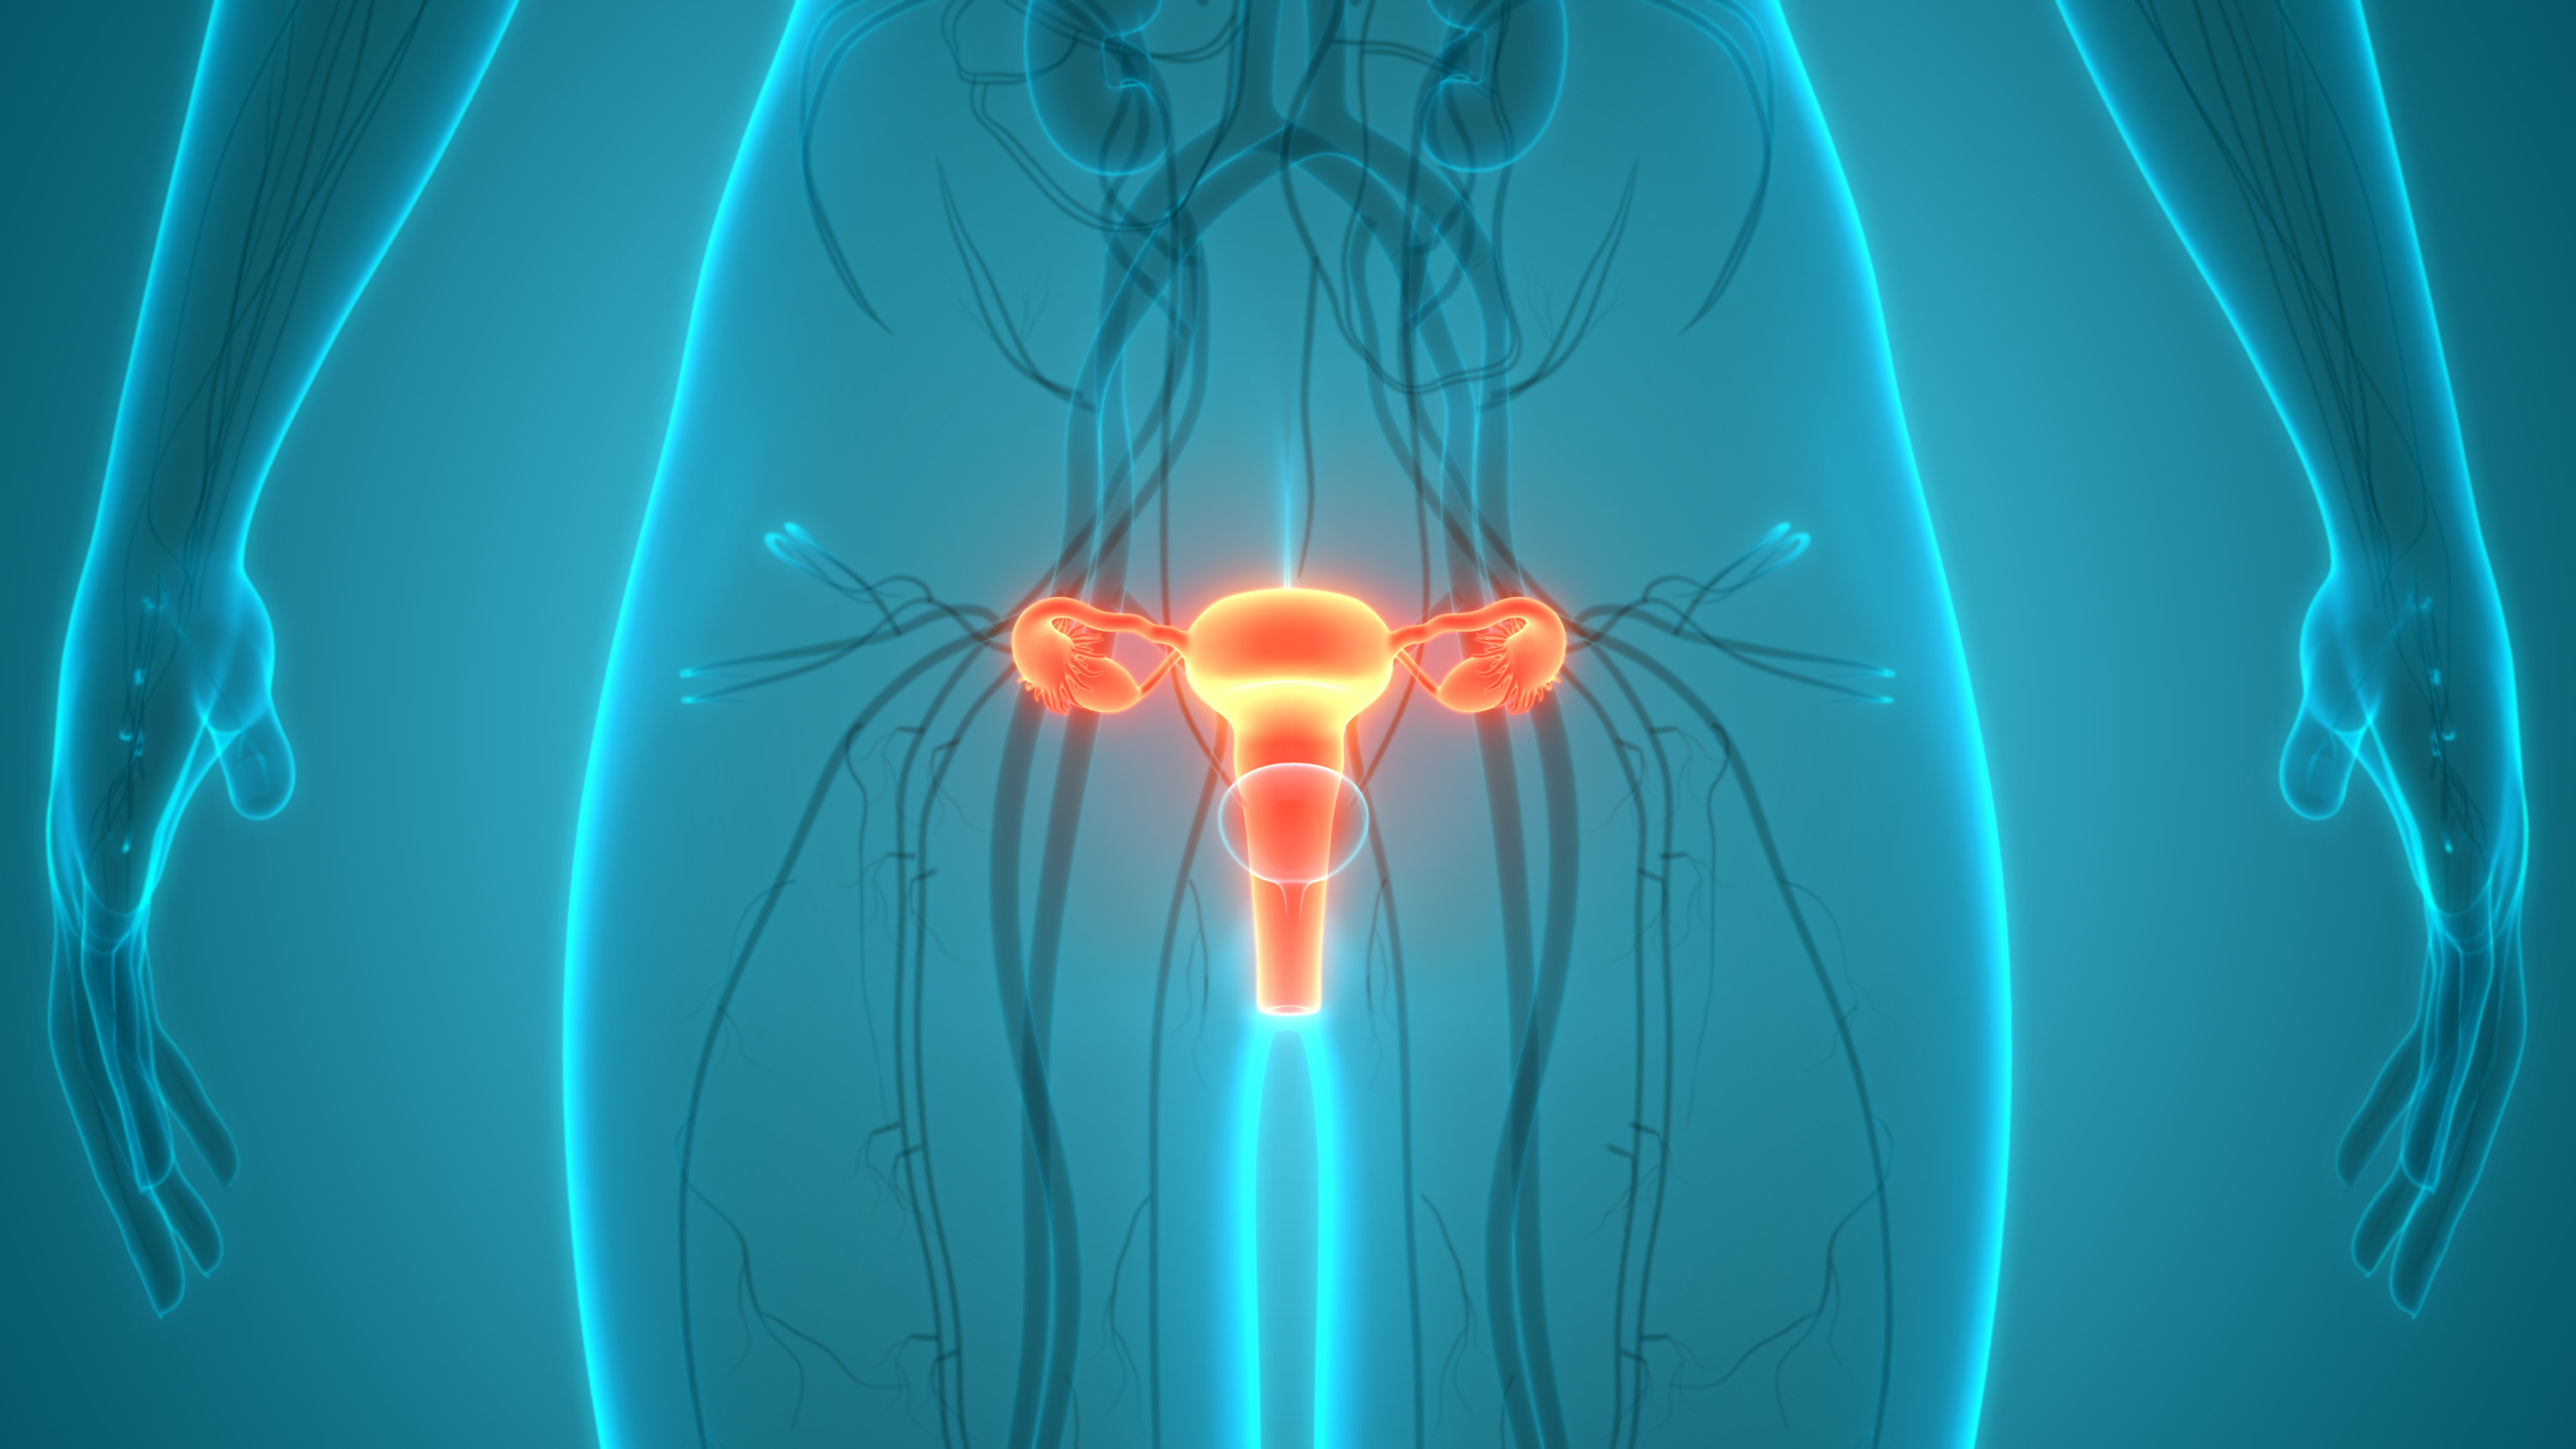 The uterus being seen via X-ray type technology